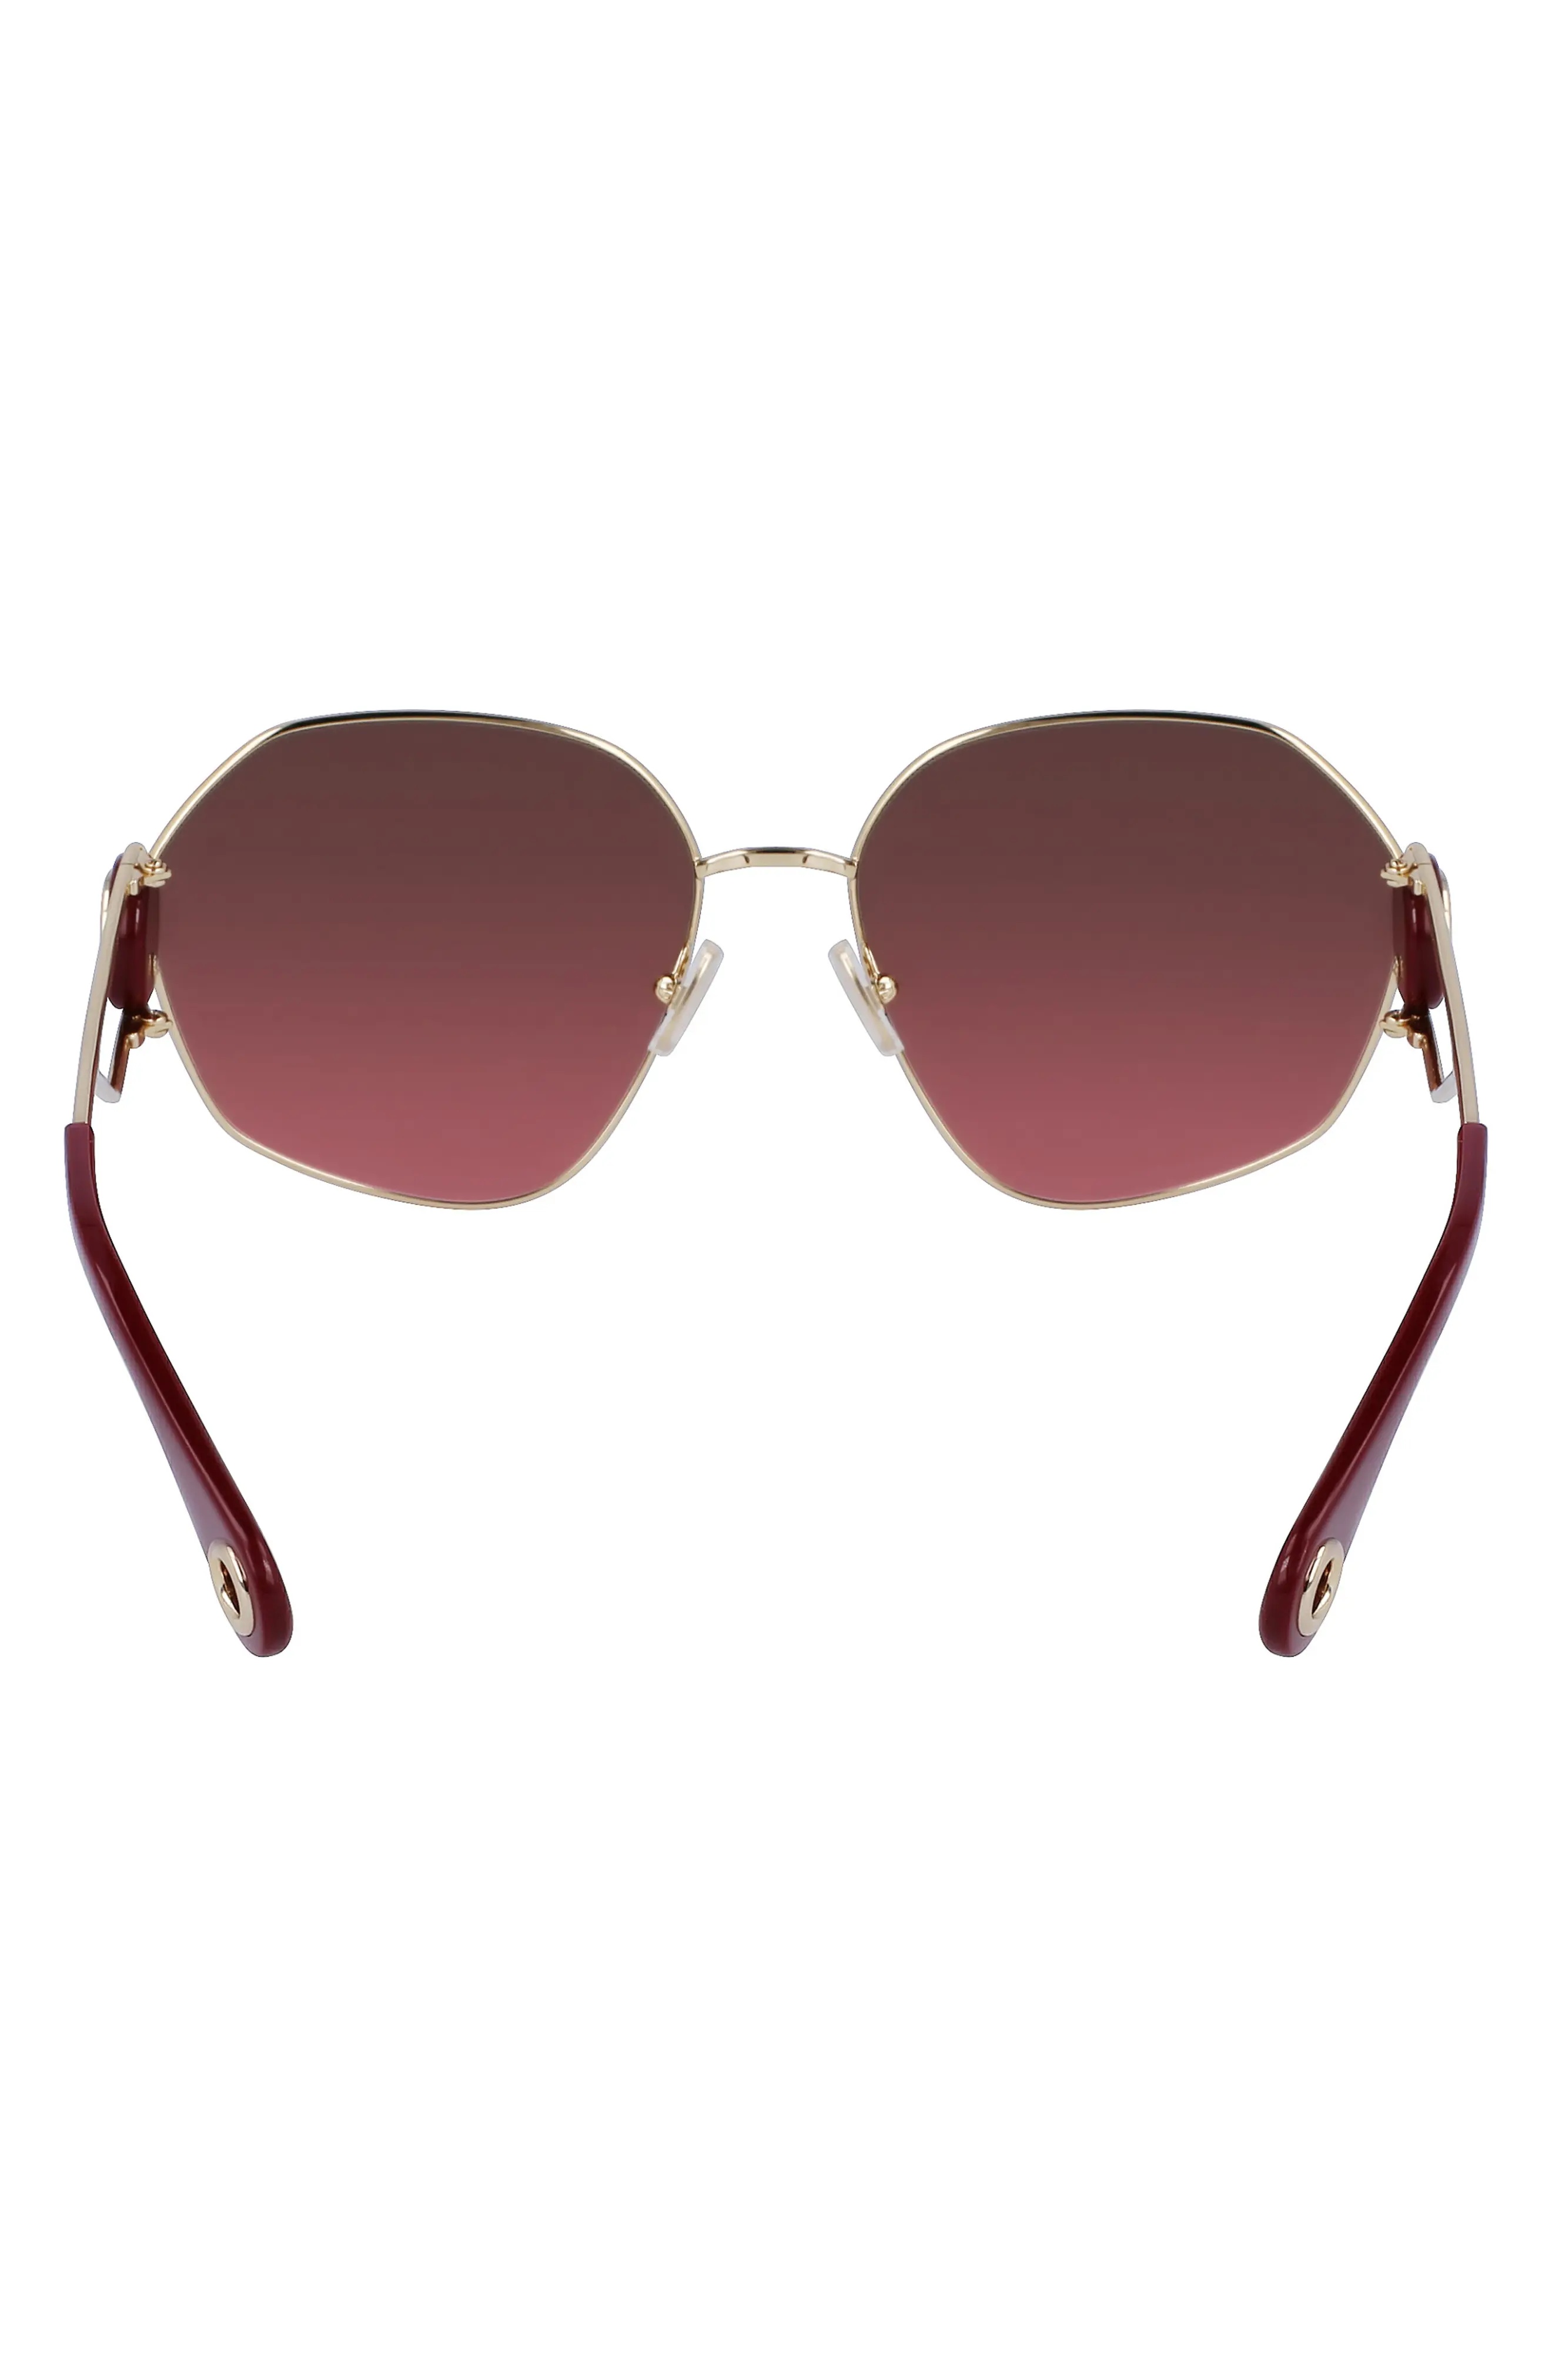 Mother & Child 62mm Oversize Rectangular Sunglasses in Gold/Gradient Cherry - 5